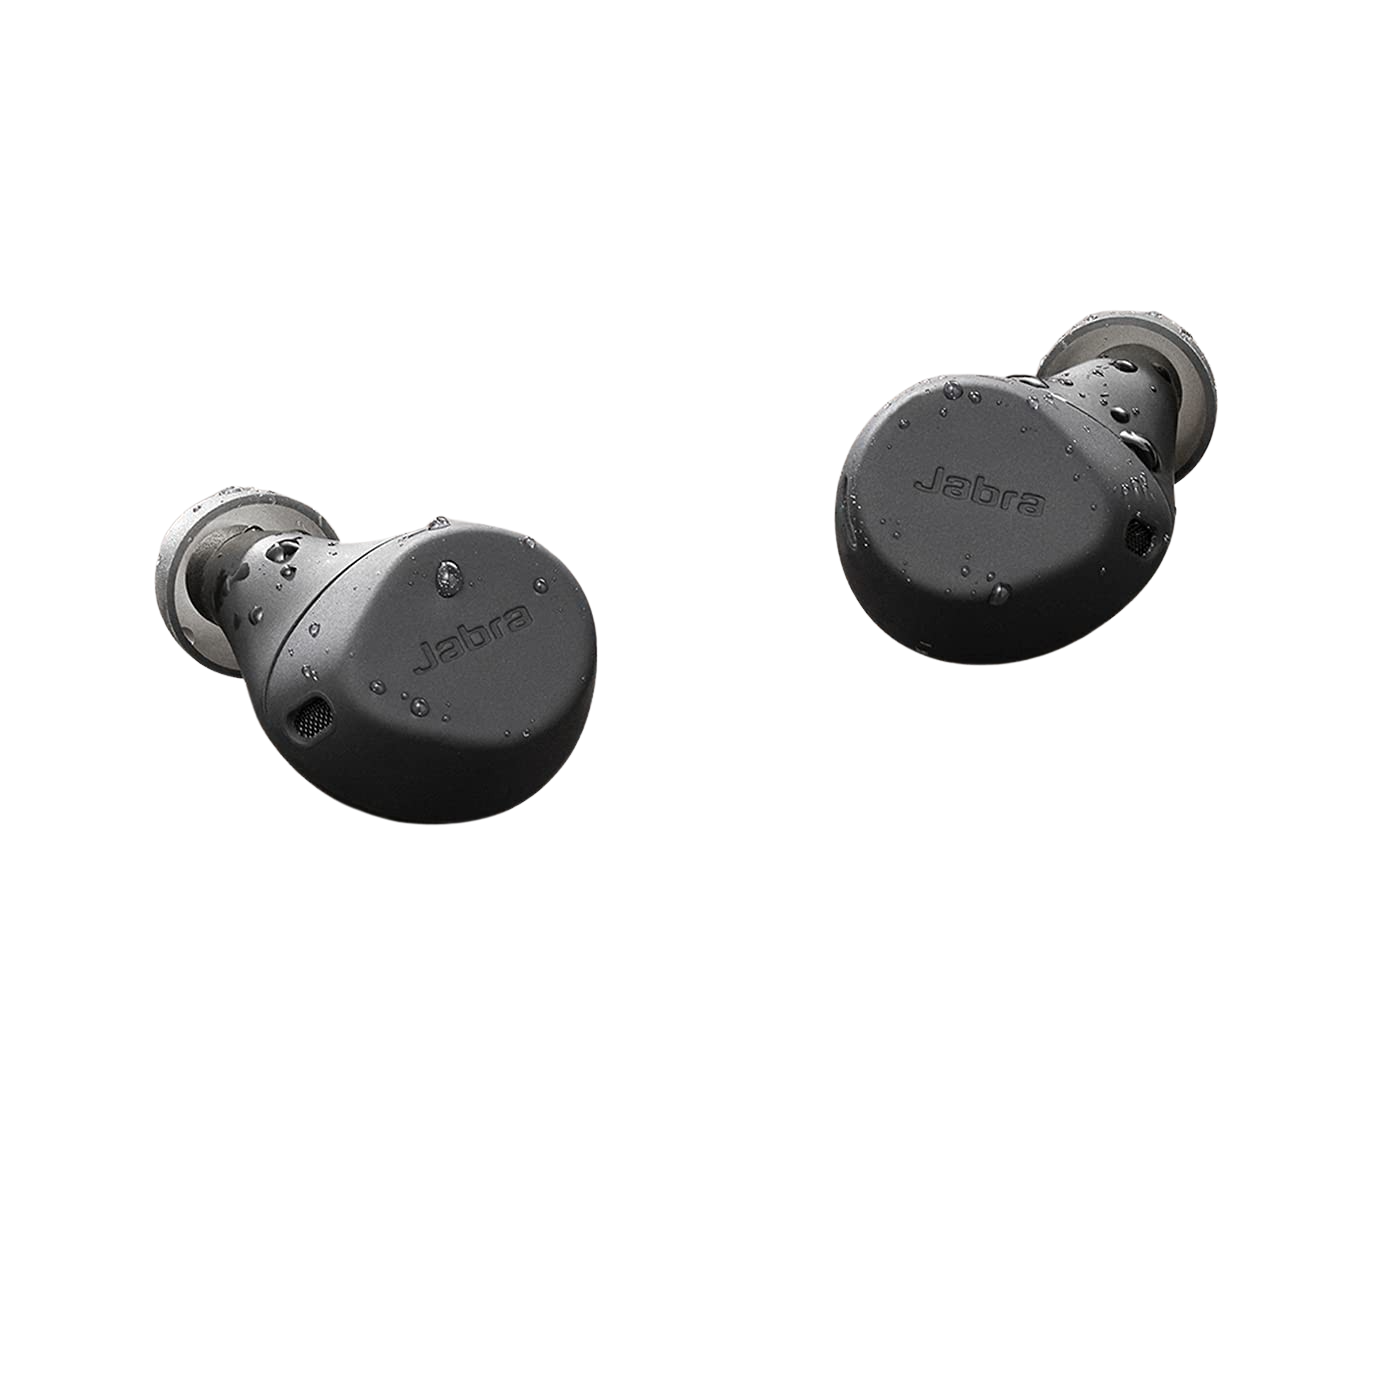 Black Jabra Elite 7 Active Noise-cancelling In-ear Bluetooth Headphones.4